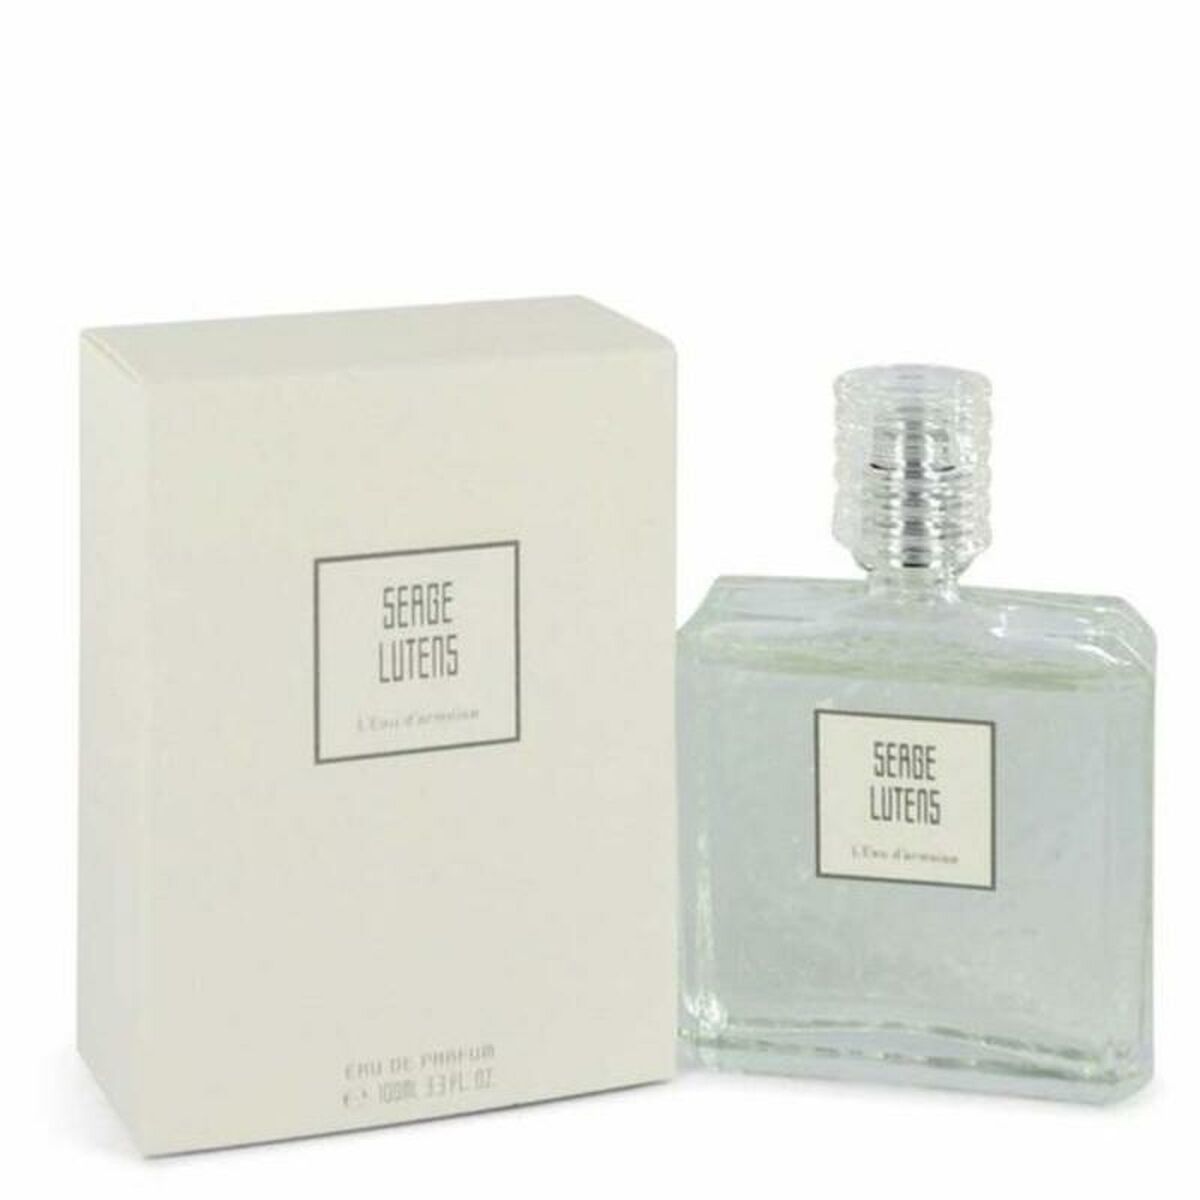 Unisex Perfume Serge Lutens EDP L'eau D'armoise 100 ml-0